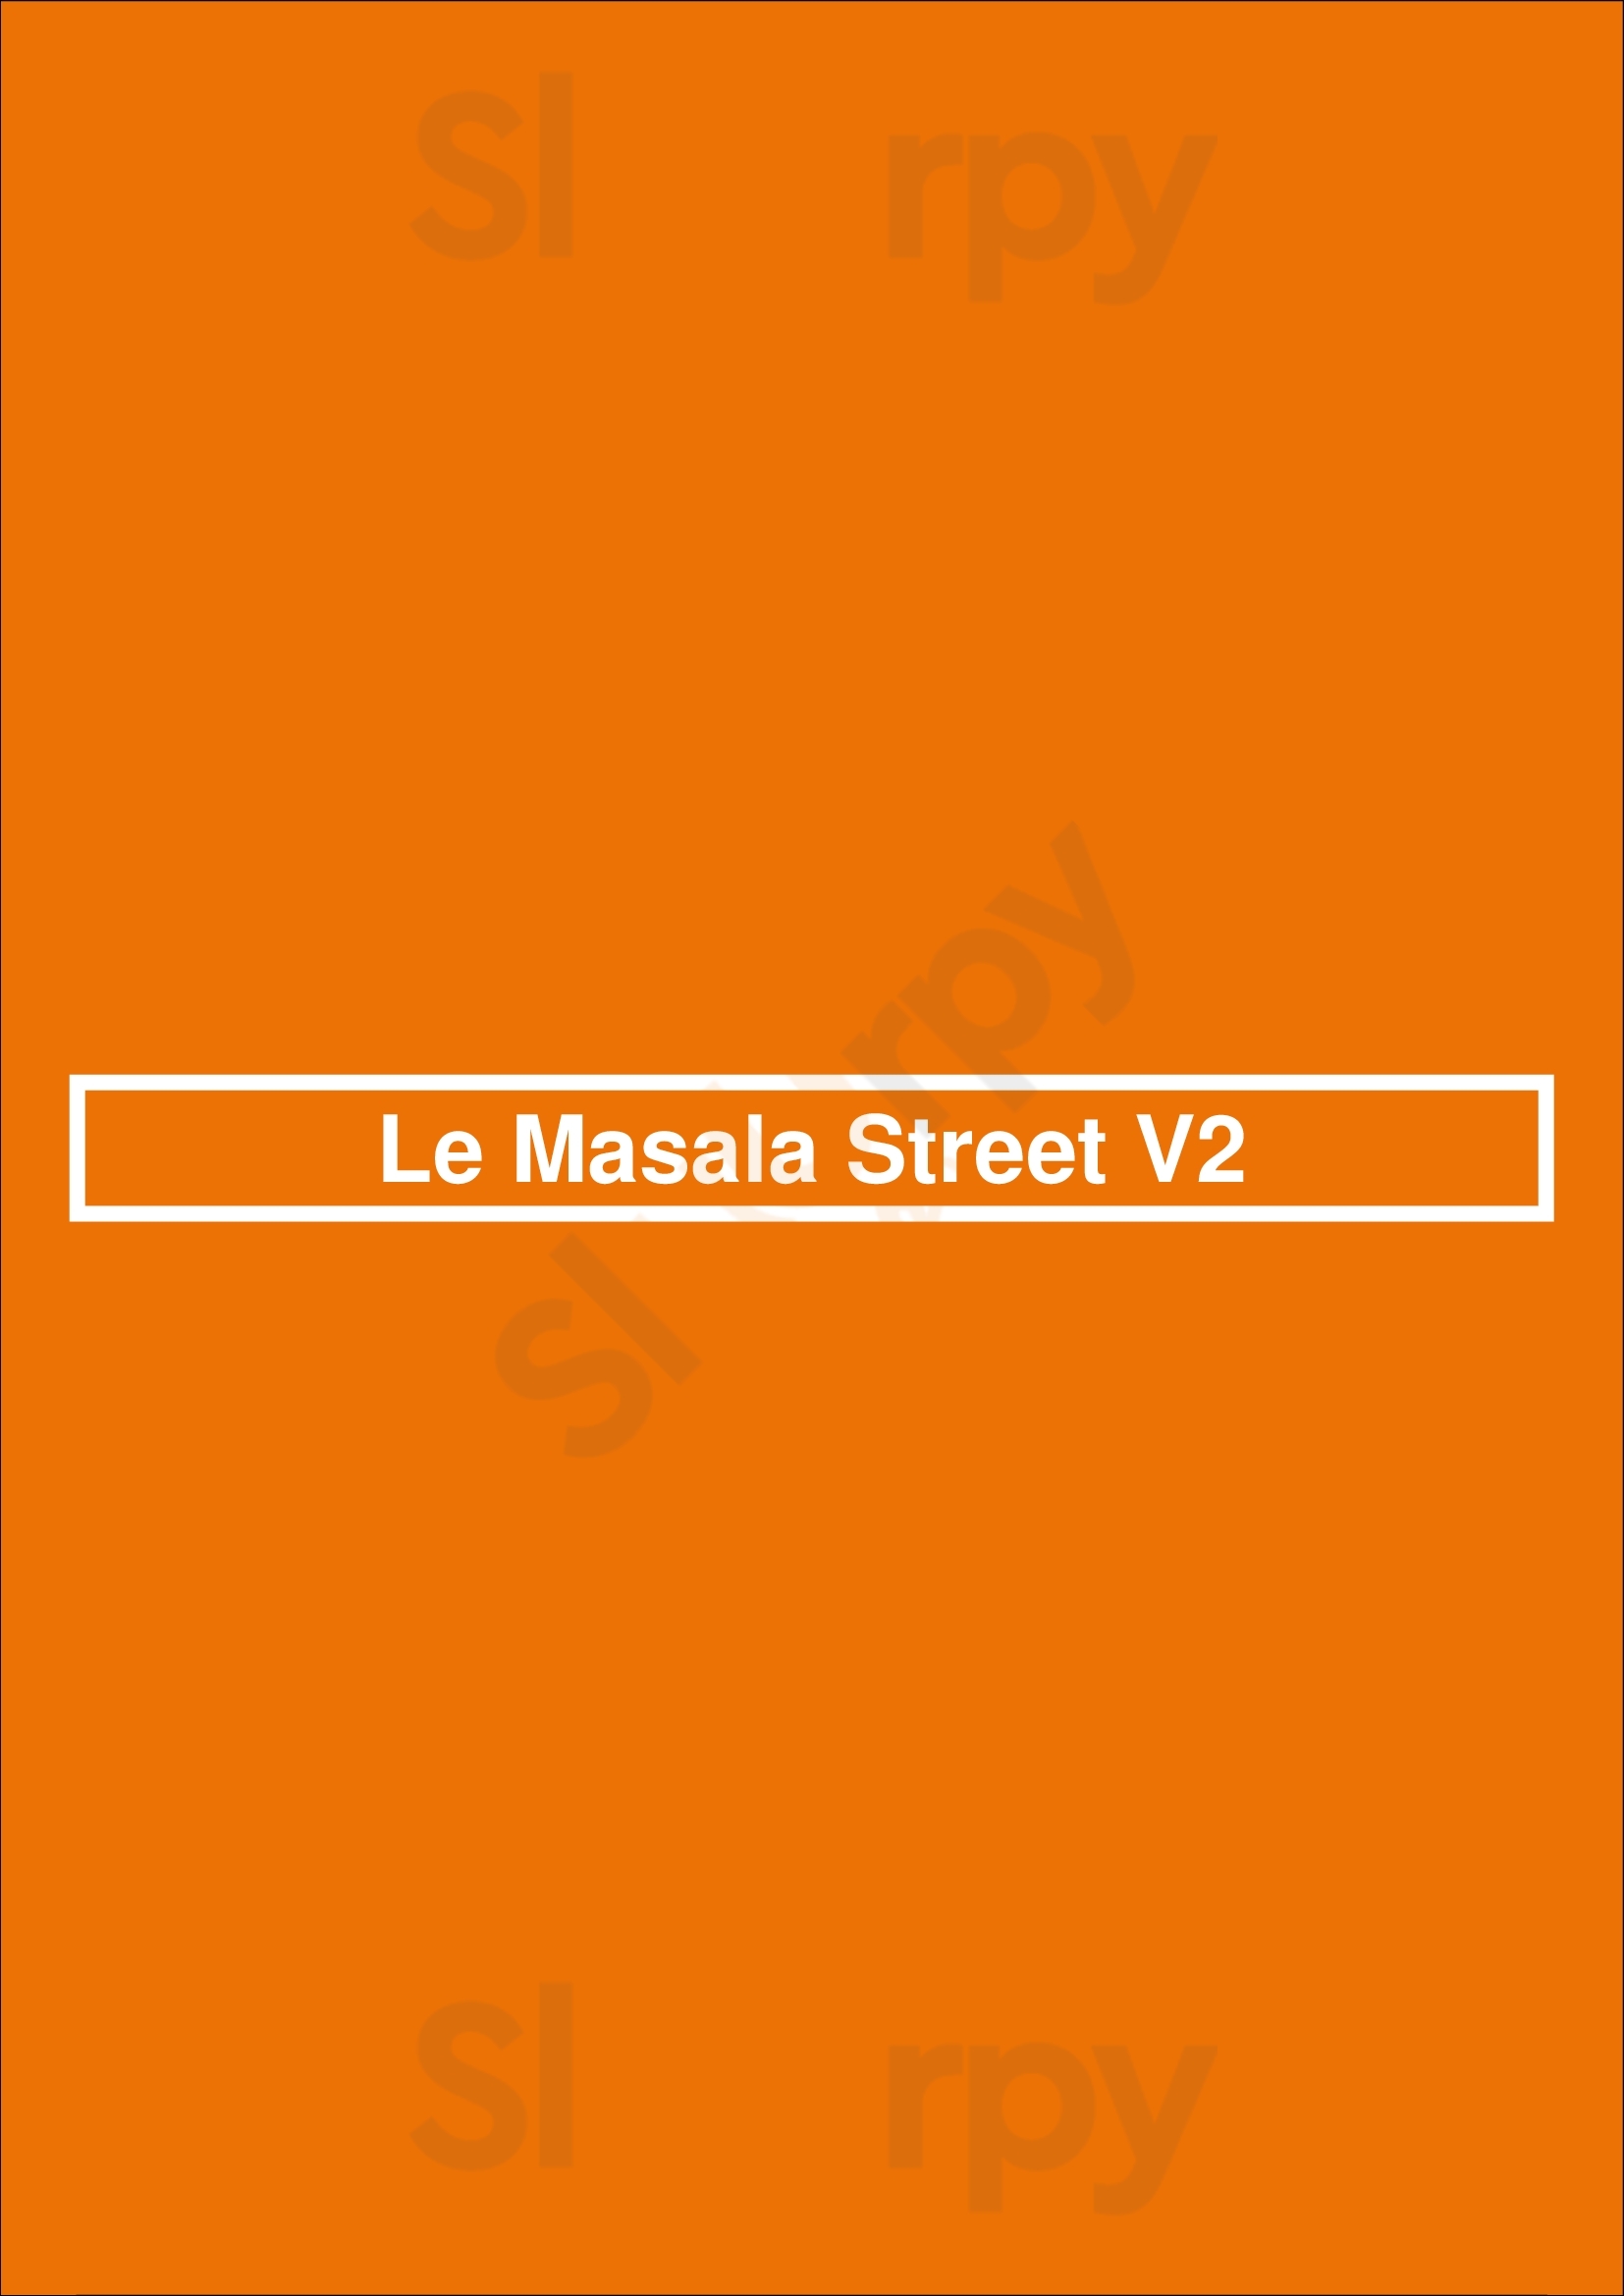 Le Masala Street V2 Villeneuve d'Ascq Menu - 1